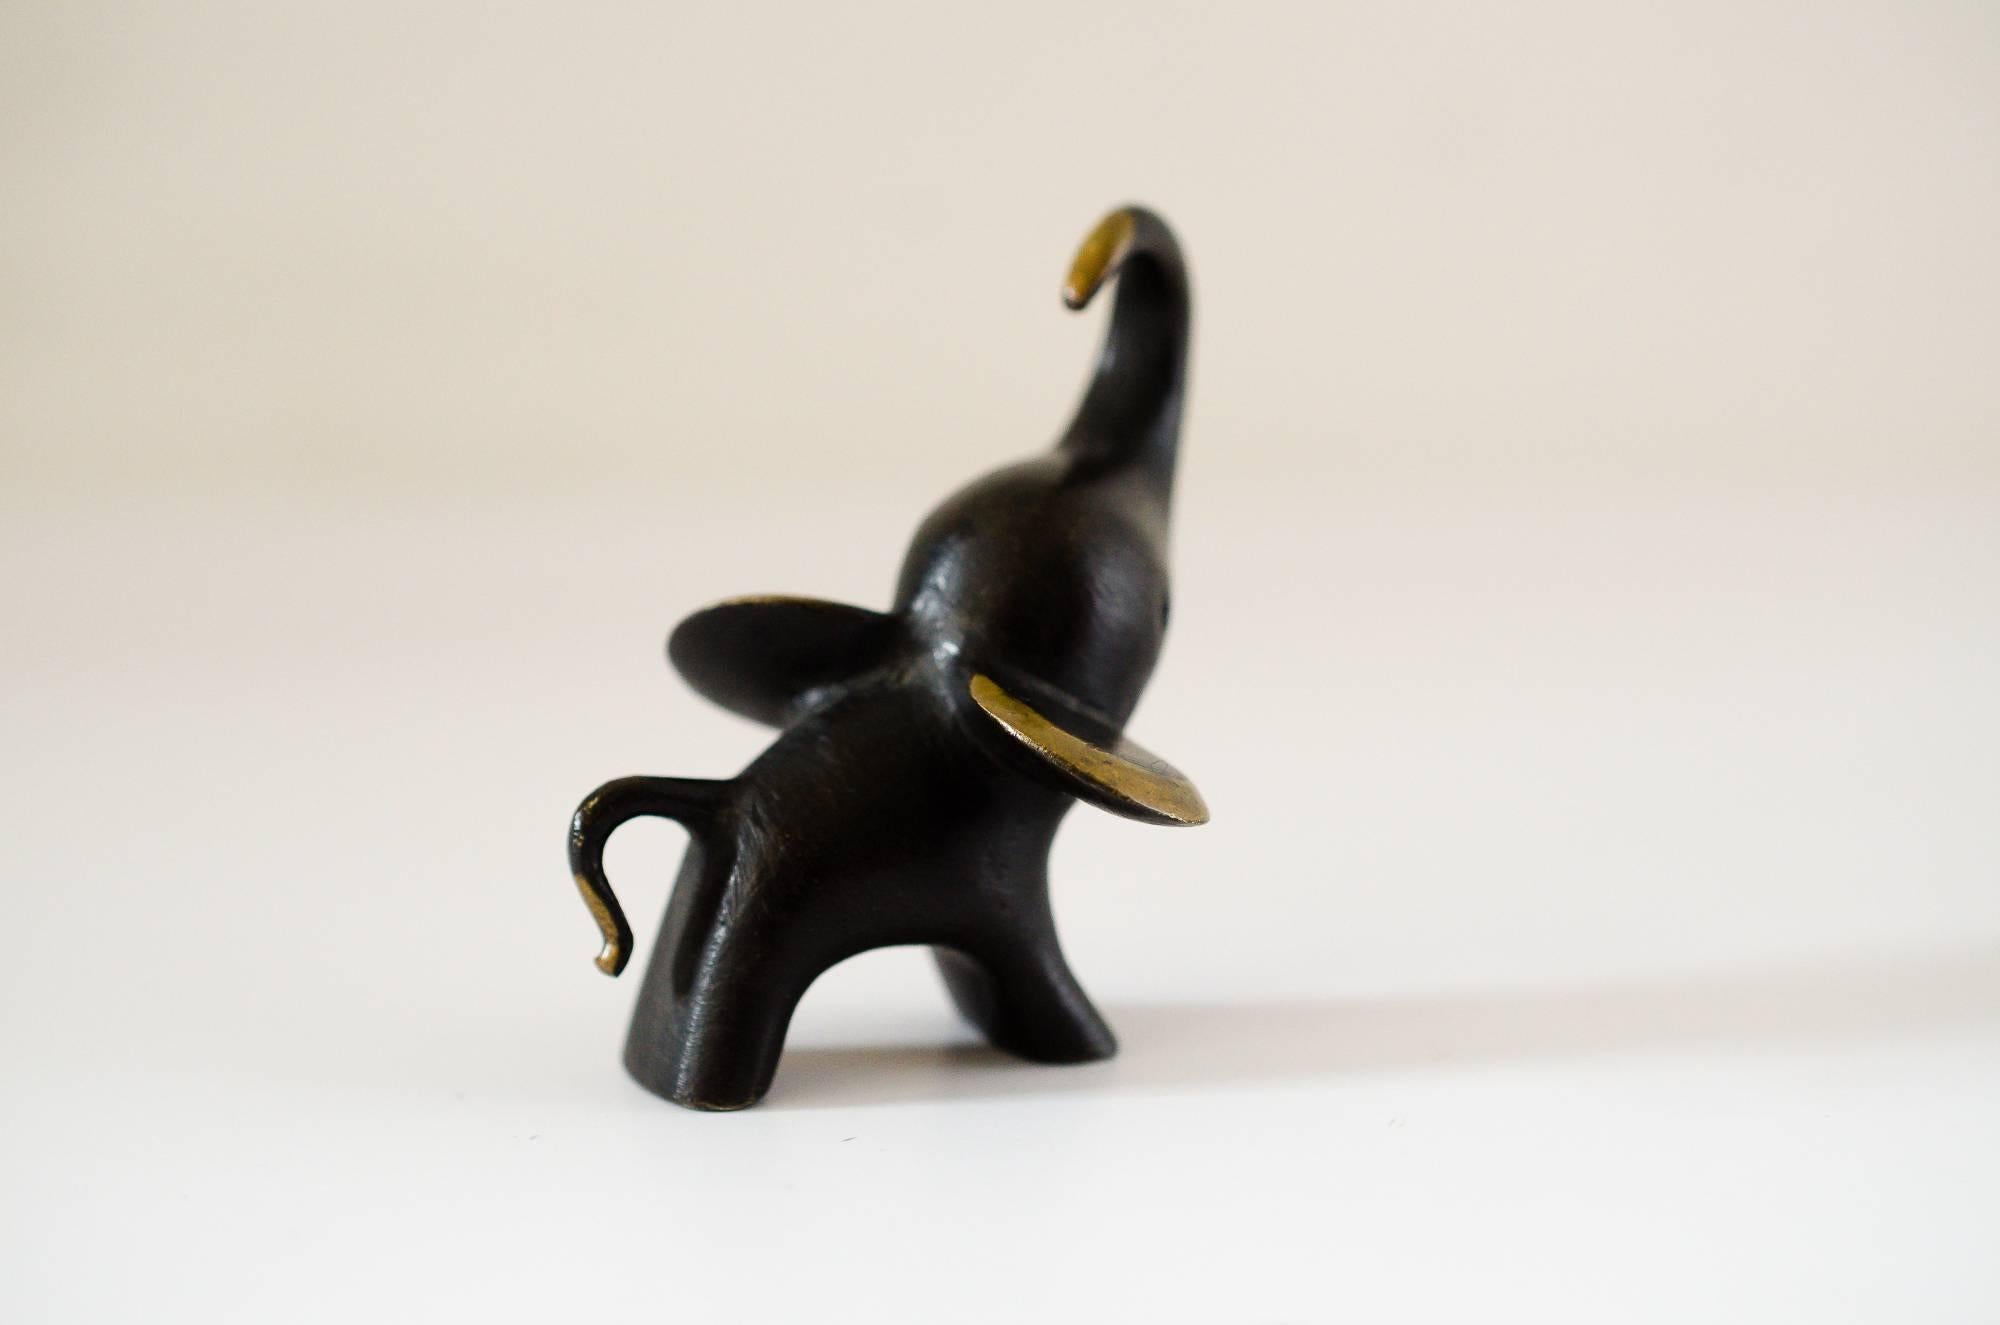 Blackened Elephant Figurine by Walter Bosse